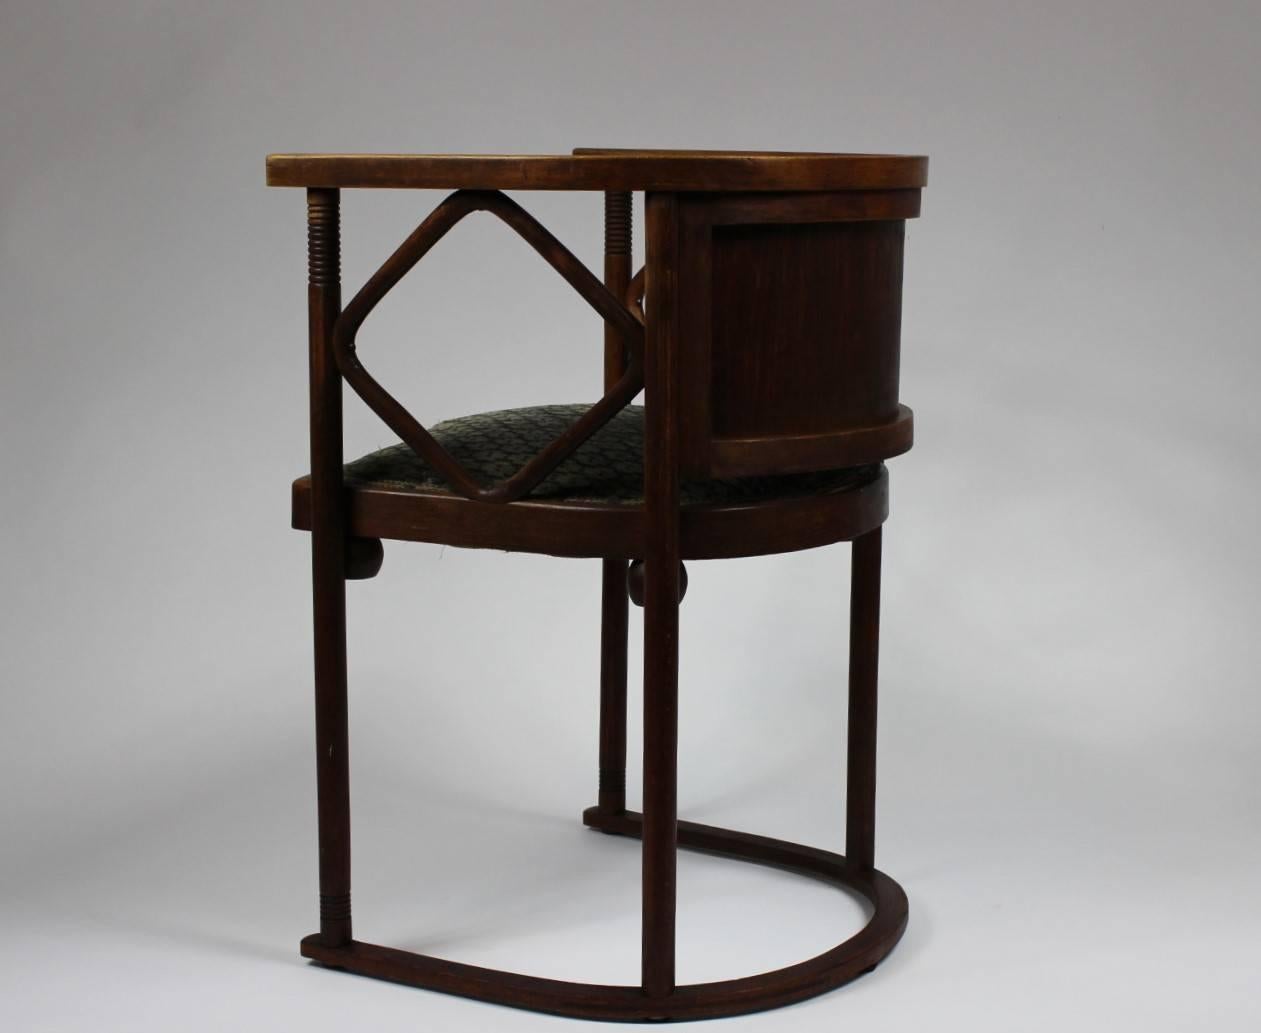 Vienna Secession Josef Hoffmann Fledermaus Chair, Model No. 728, J. & J. Kohn 1913